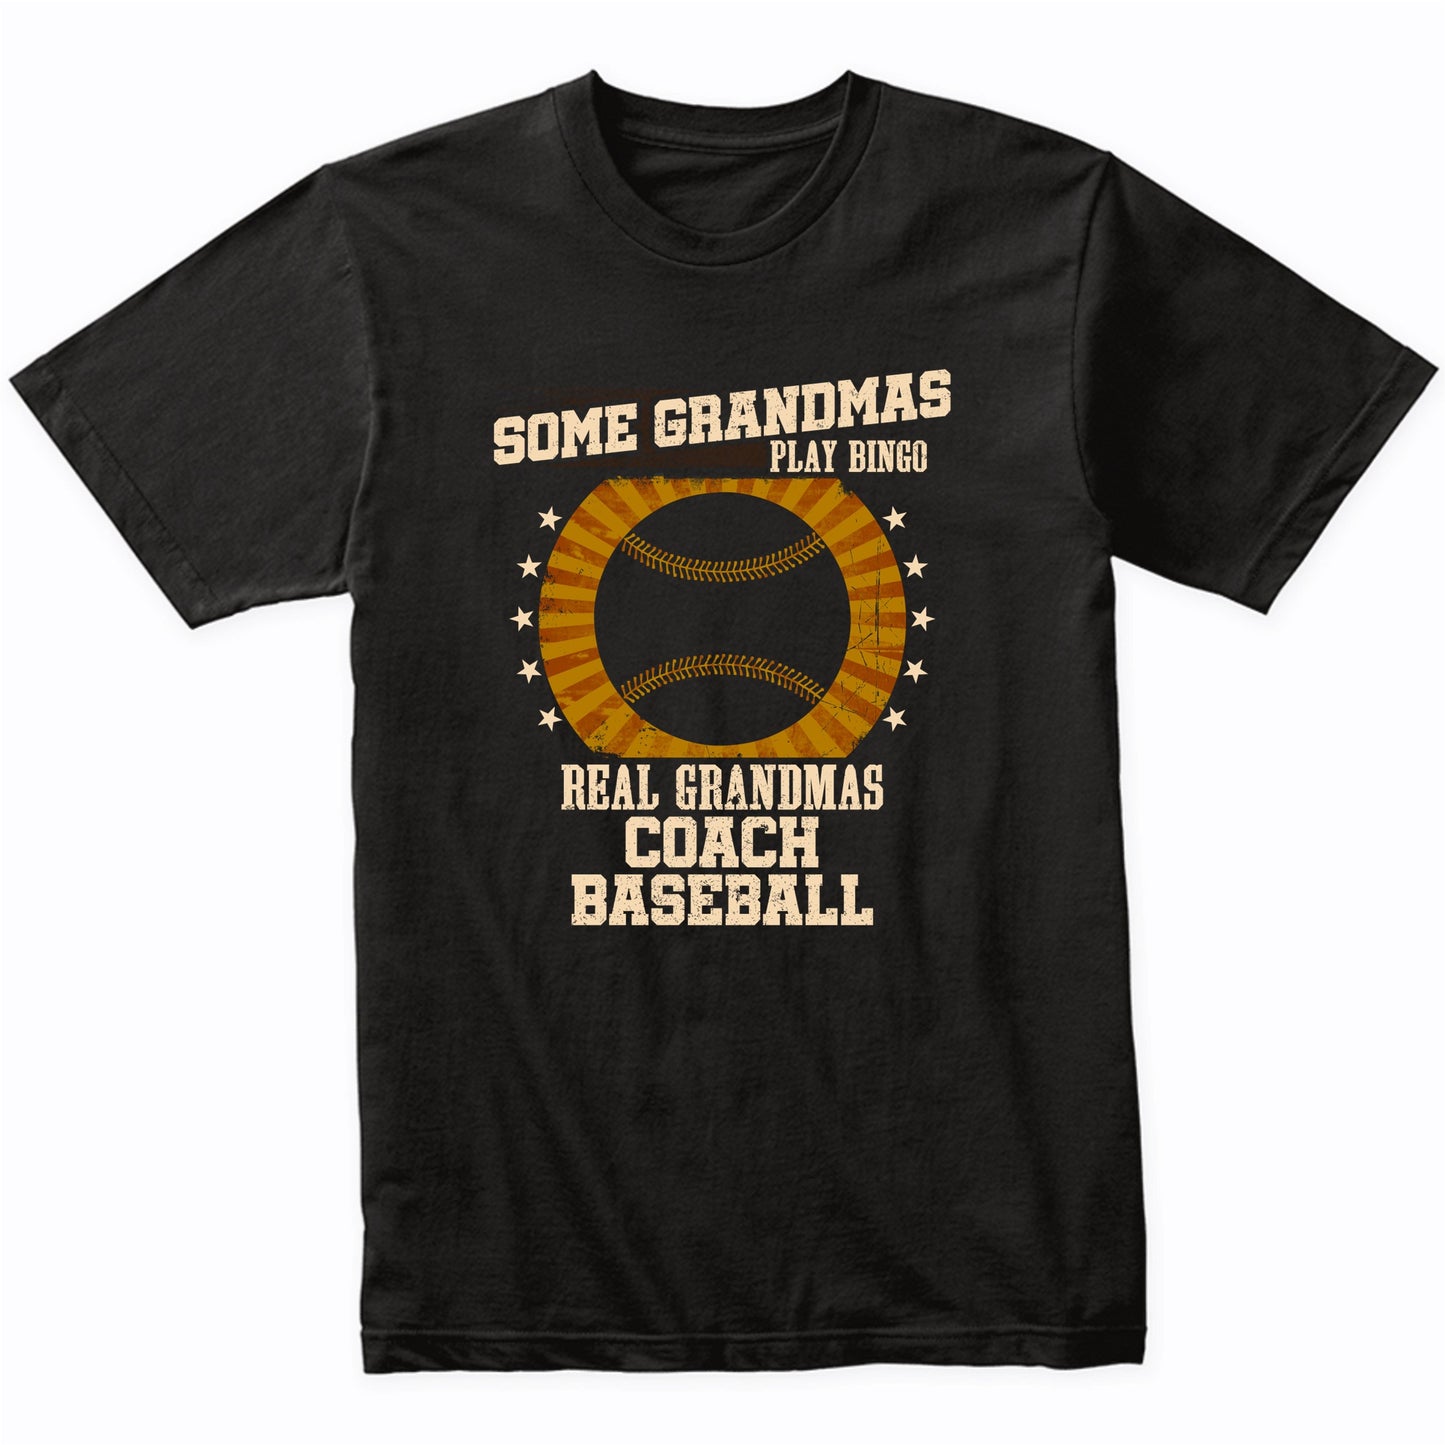 Baseball Grandma Shirt - Real Grandmas Coach Baseball T-Shirt